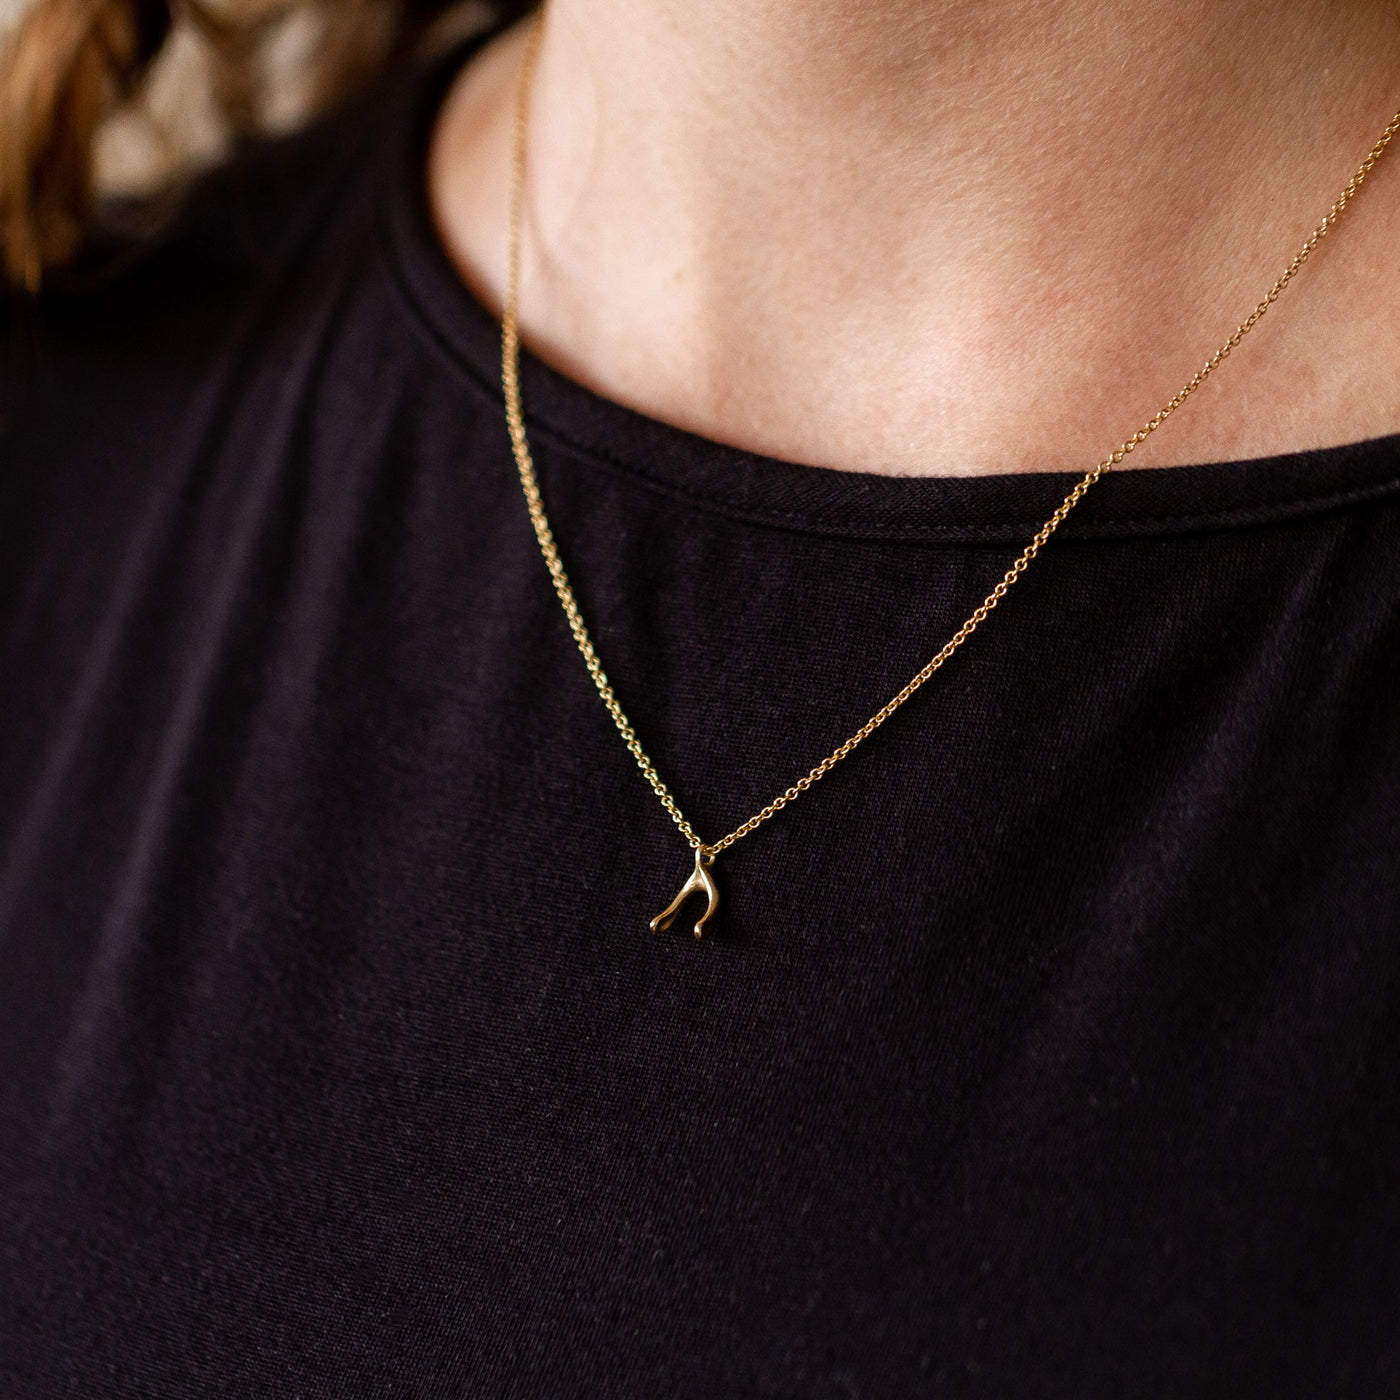 Gold Wishbone Necklace by Corey Egan around a neck